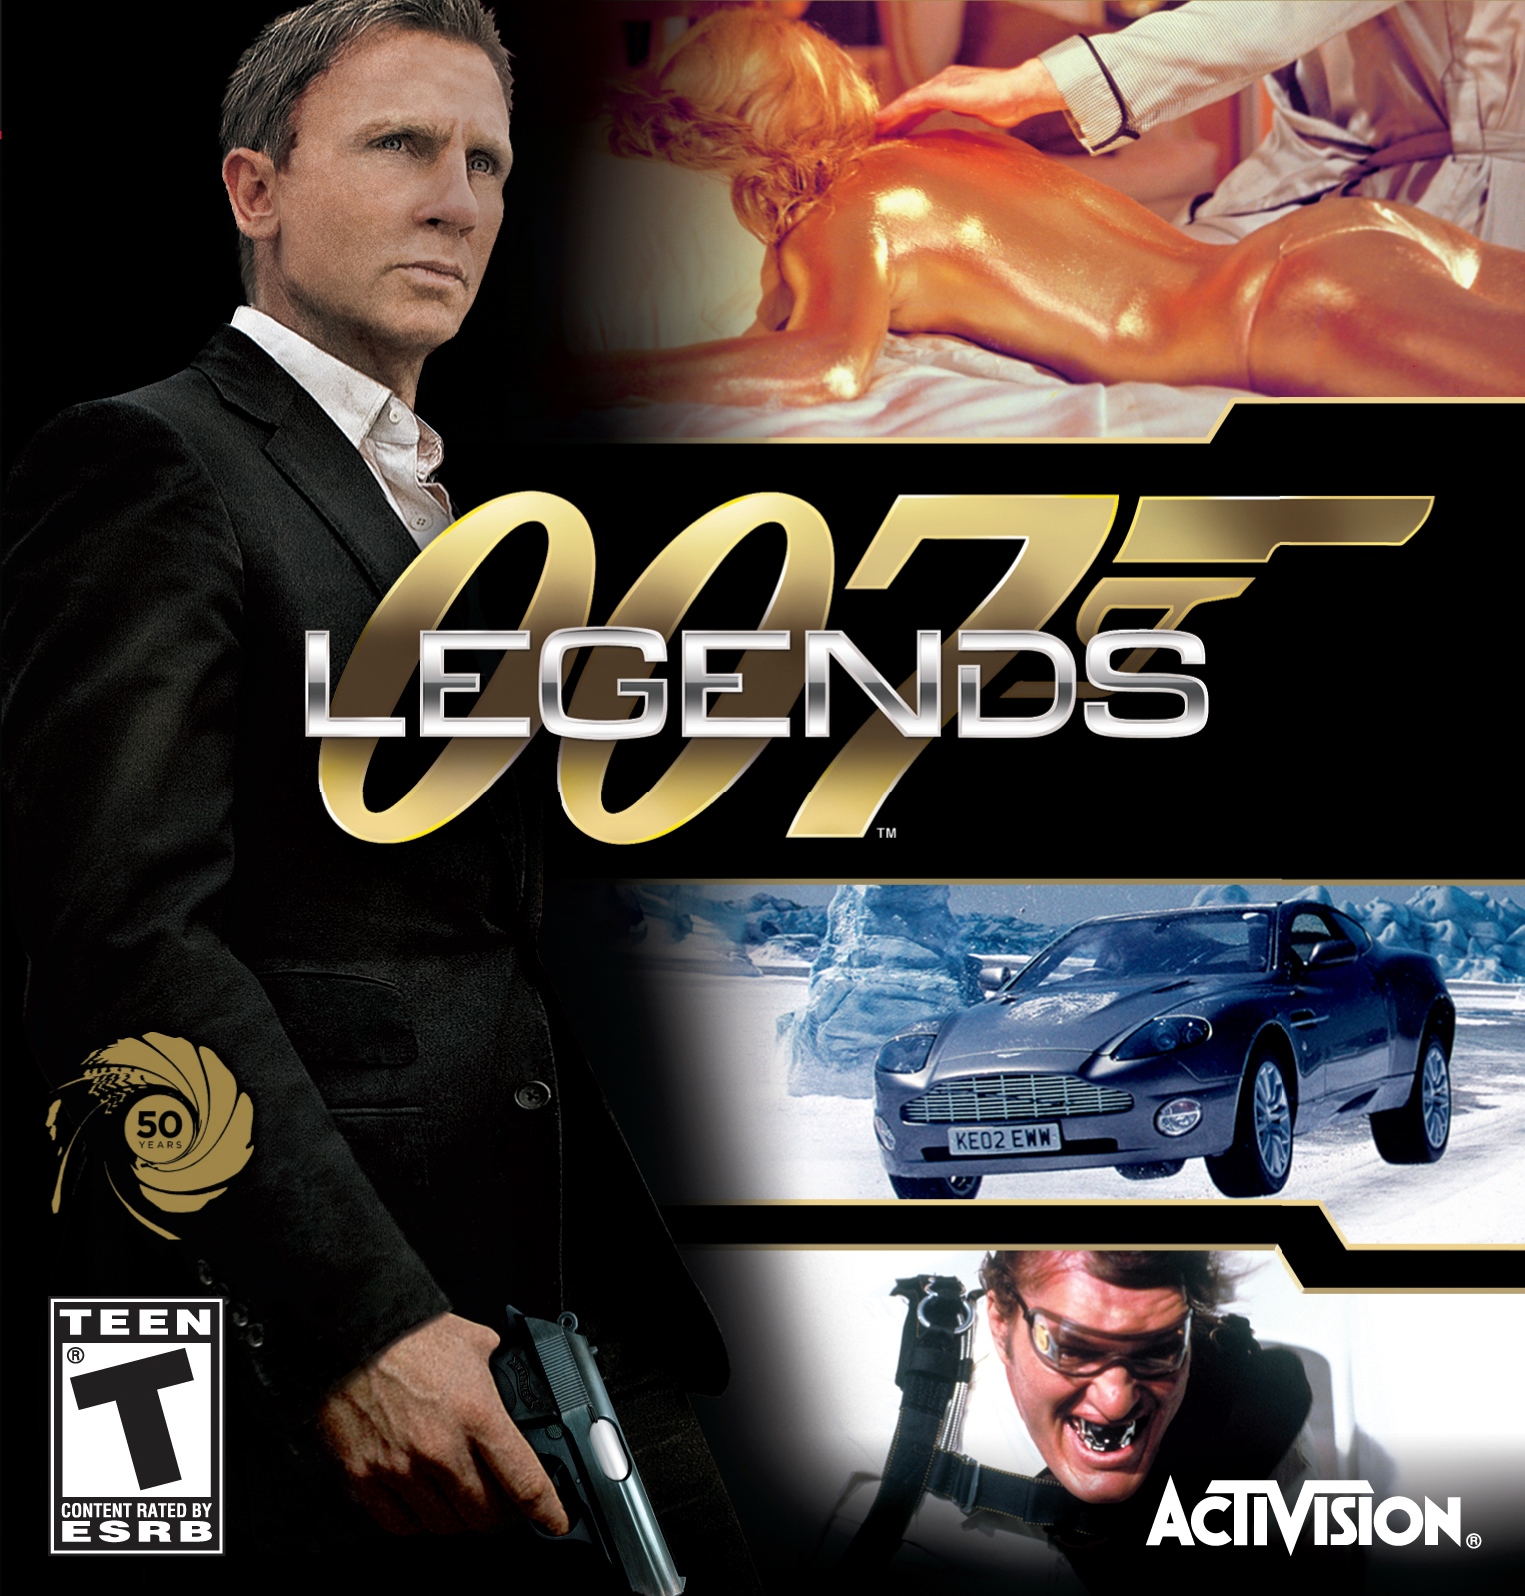 007 Legends | 007 legends Wiki | FANDOM powered by Wikia